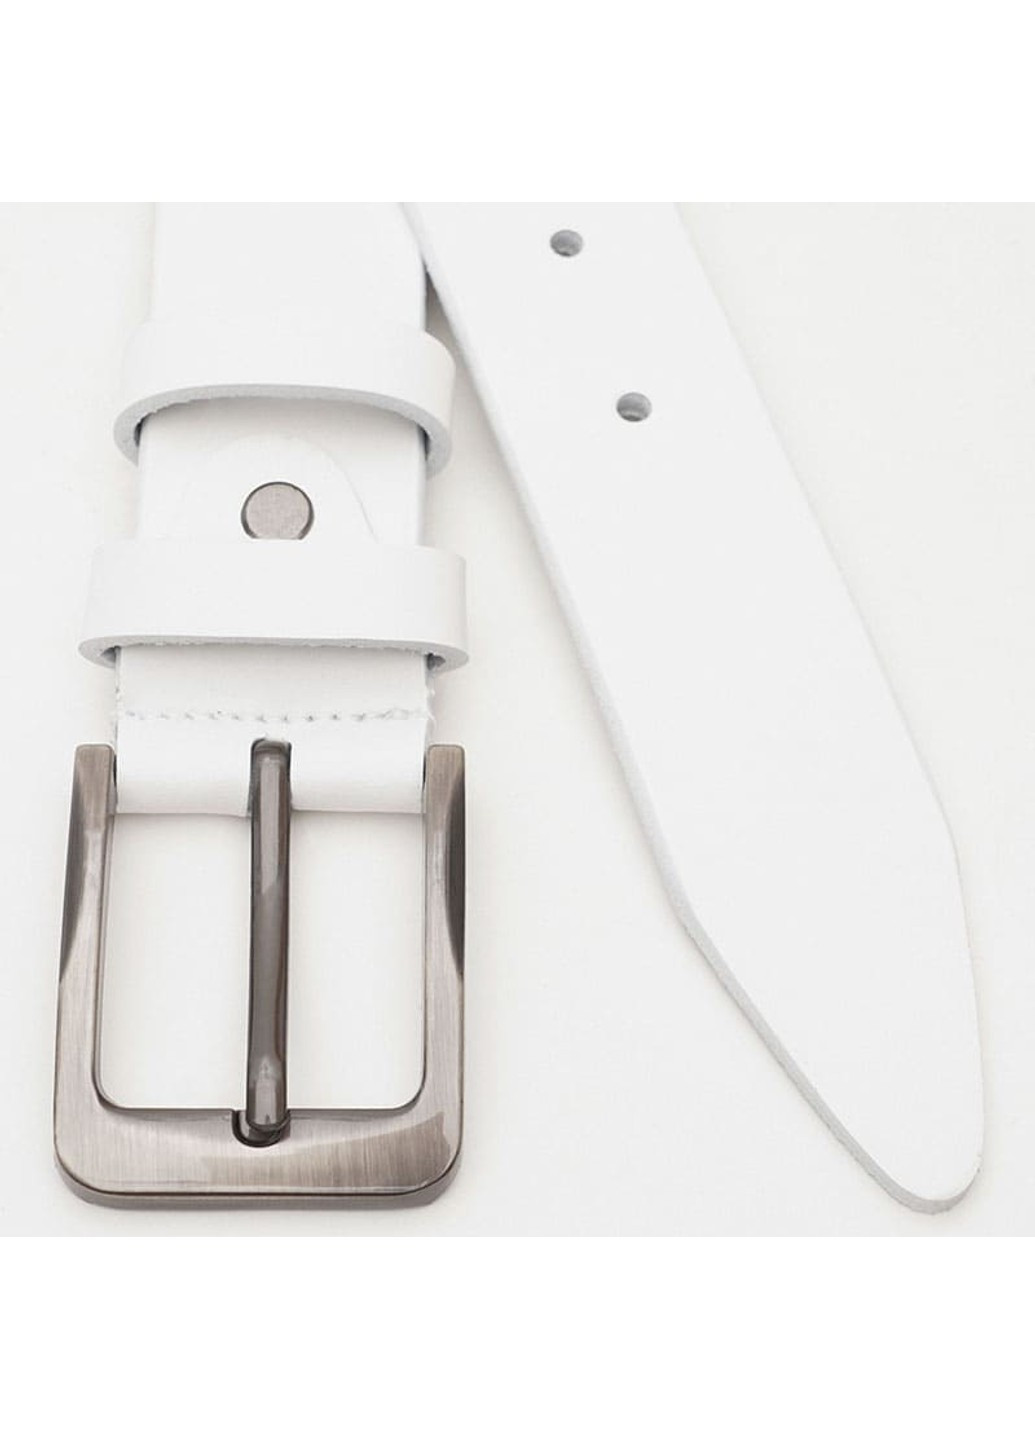 Мужской кожаный ремень V1115FX43-white Borsa Leather (271665019)